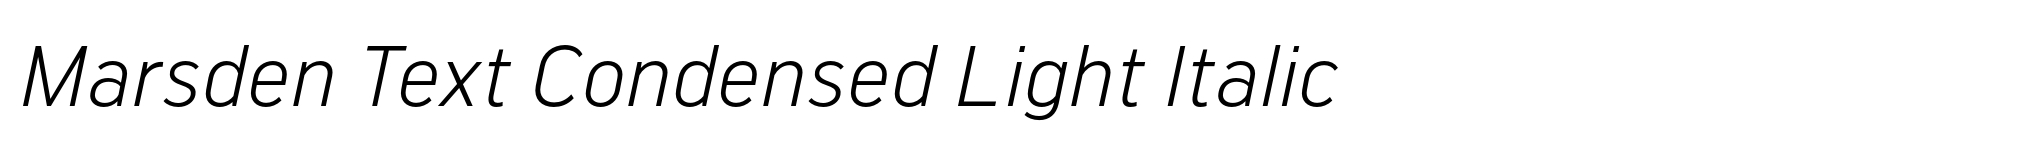 Marsden Text Condensed Light Italic image